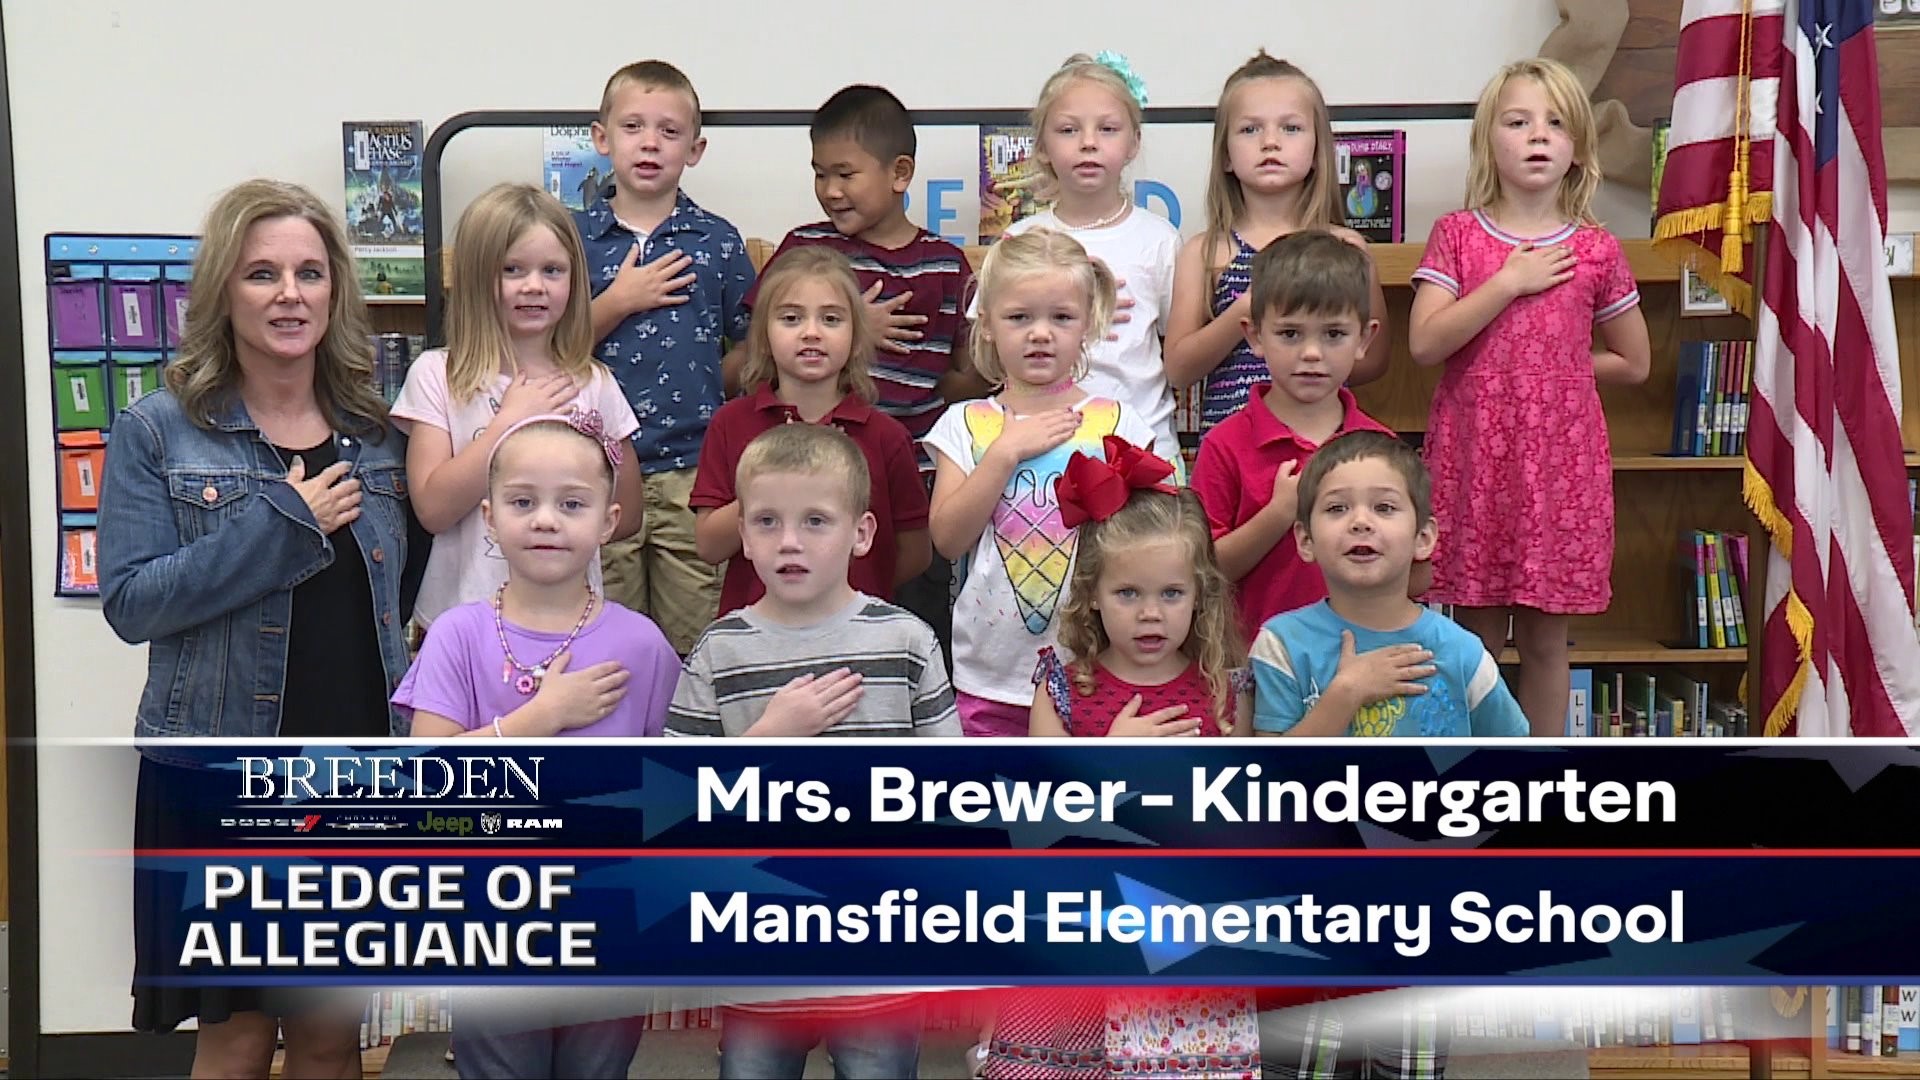 Mrs. Brewer Kindergarten Mansfield Elementary School